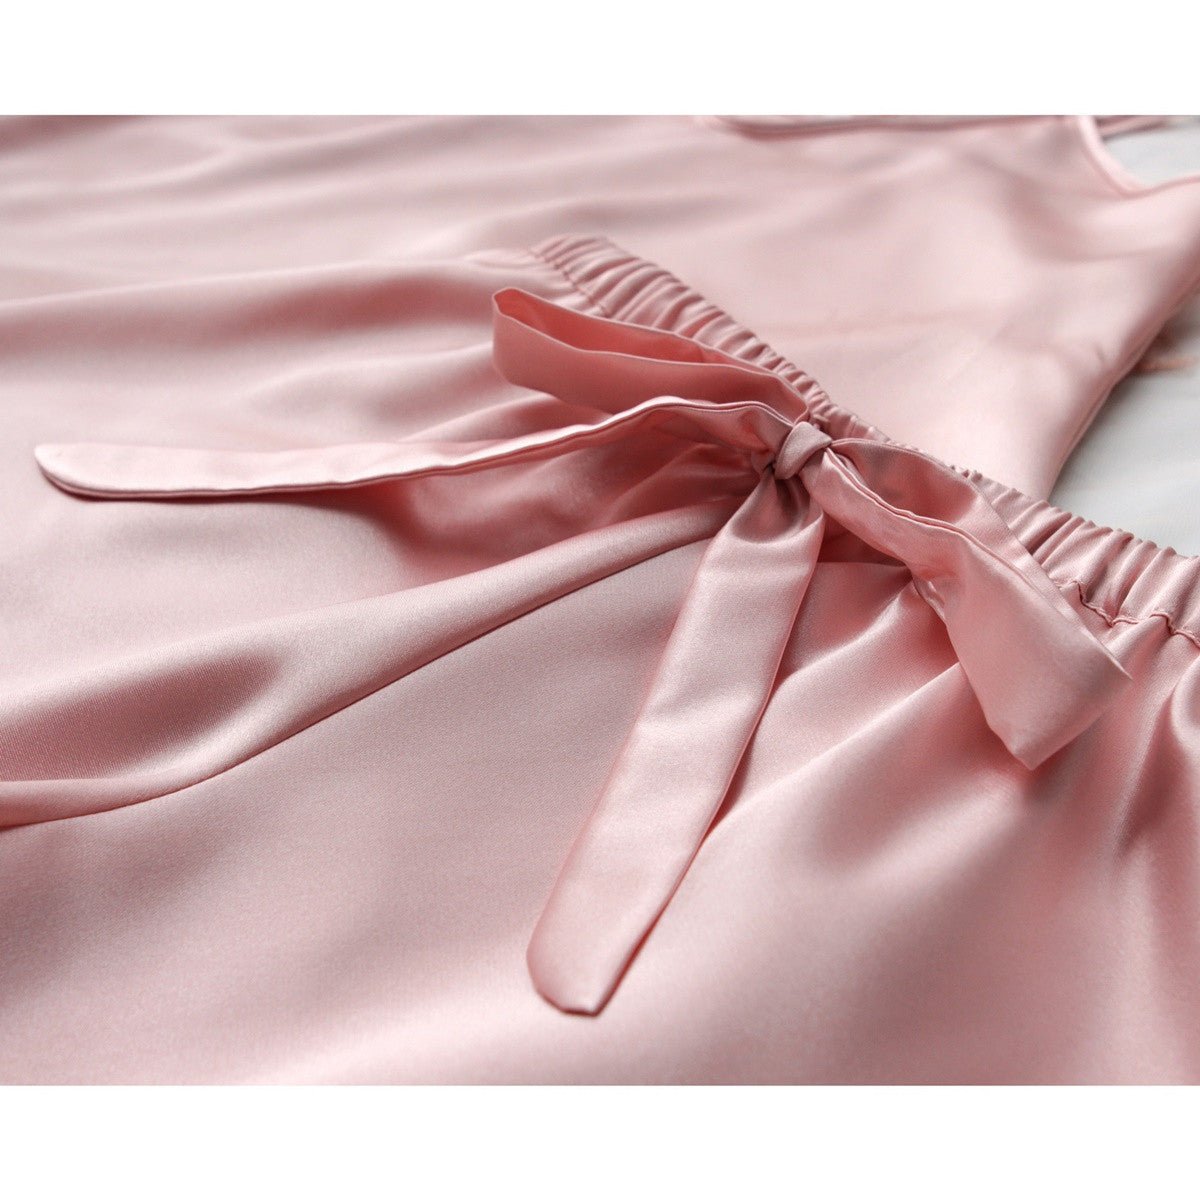 Satin pajama luxury nightwear loungewear sleepwear handmade in peach satin by Ange Dechu - Ange Déchu